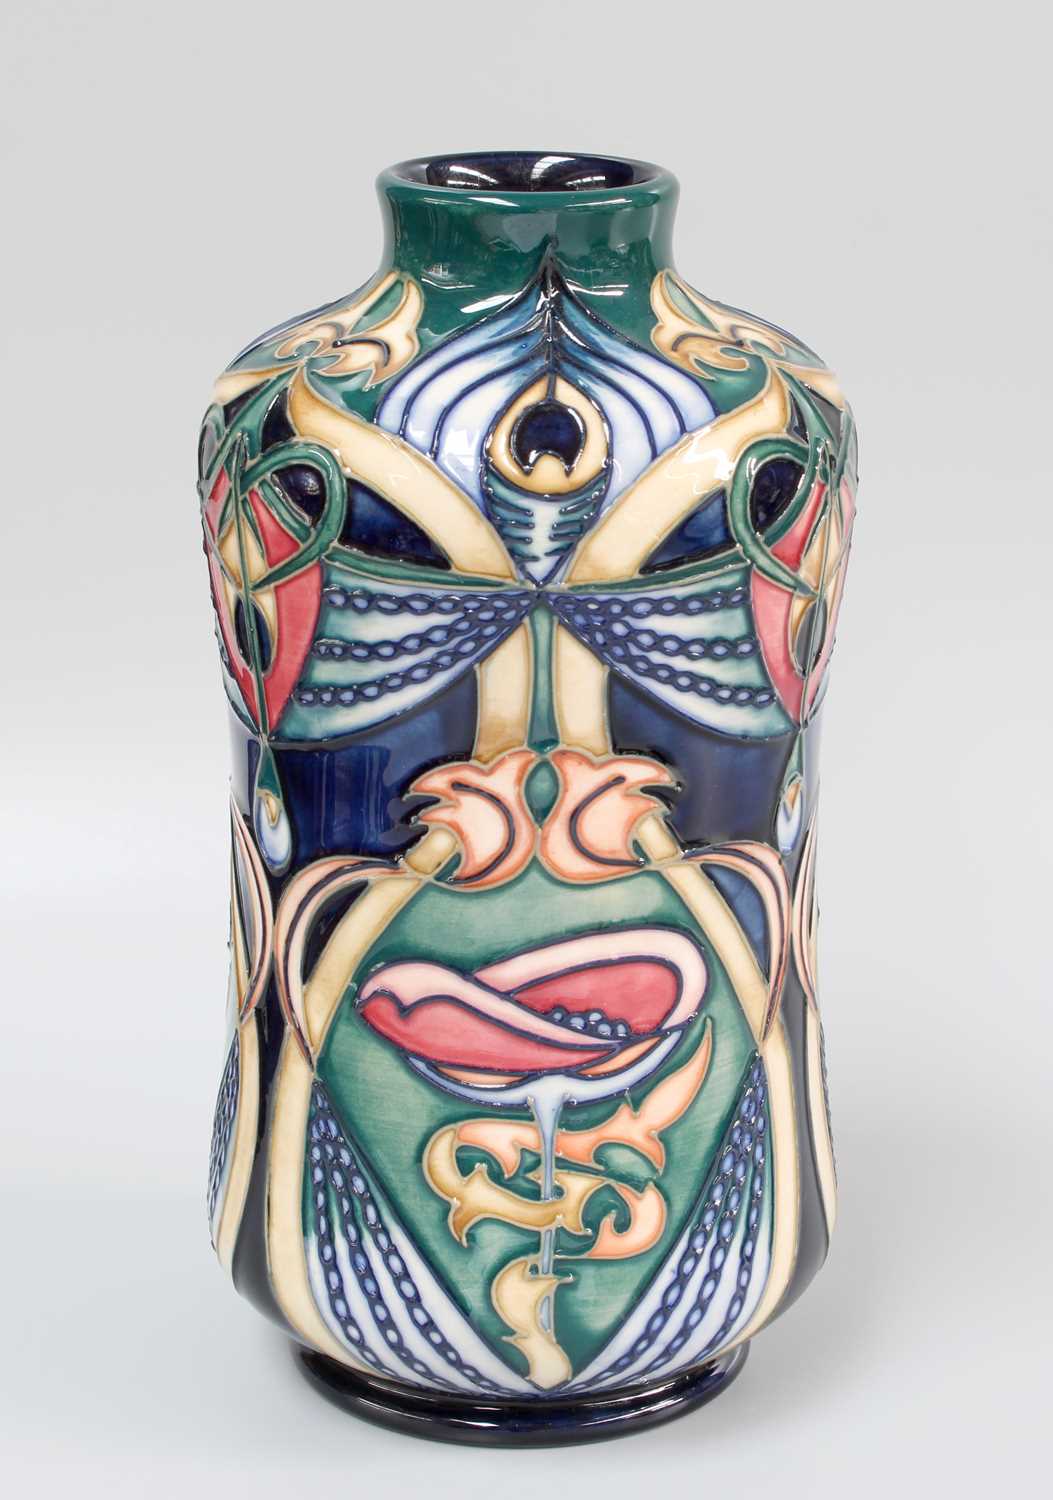 A Modern Moorcroft "Cymric Dream" Pattern Vase, by Rachel Bishop, limited edition 225/250, made